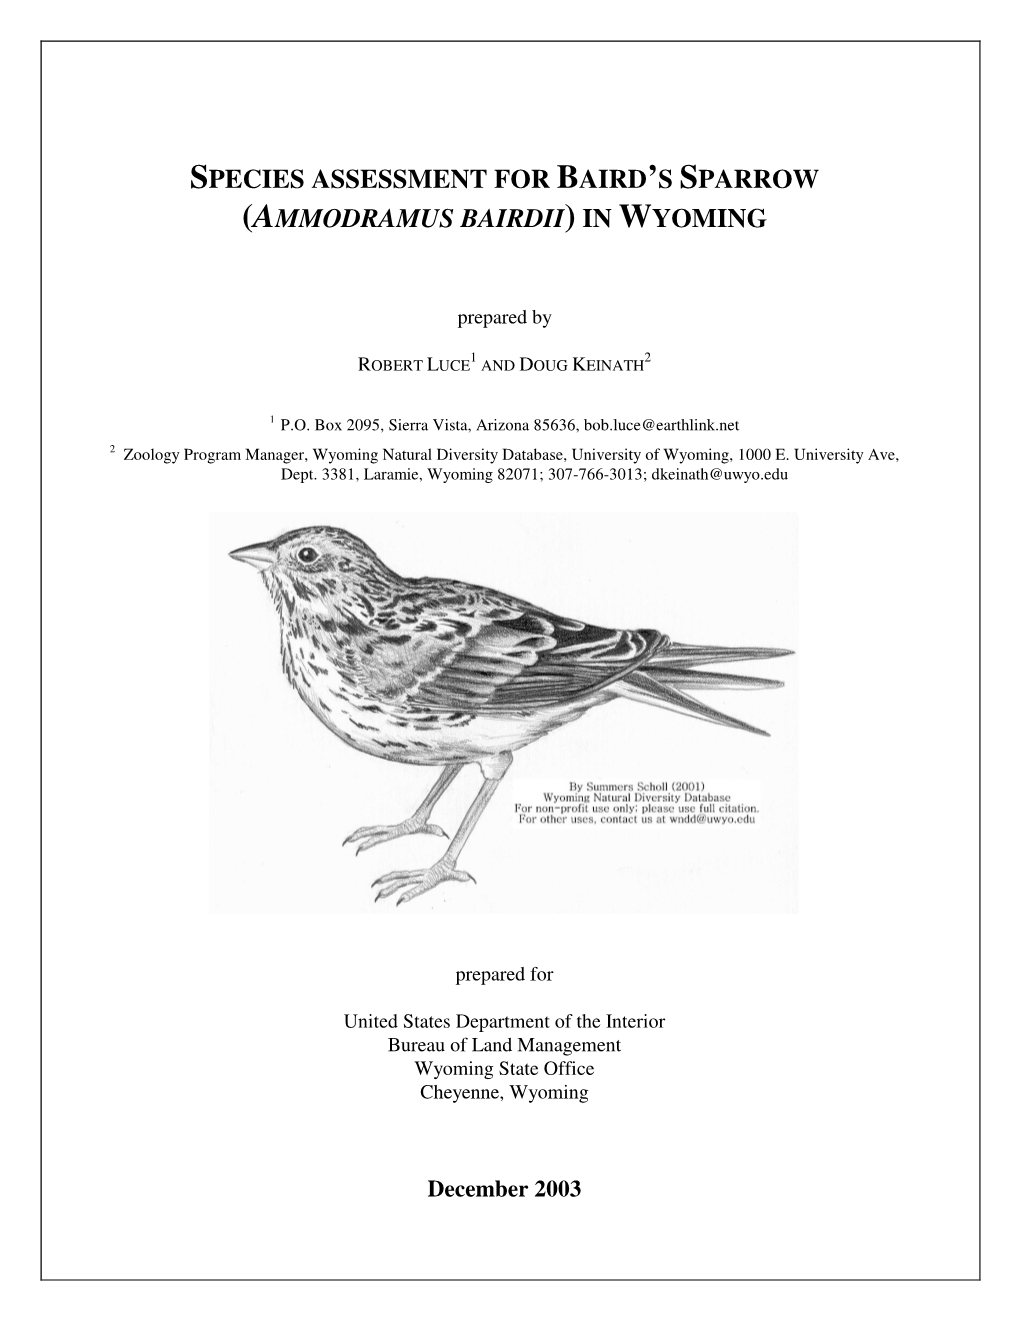 Species Assessment for Baird's Sparrow (Ammodramus Bairdii) in Wyoming